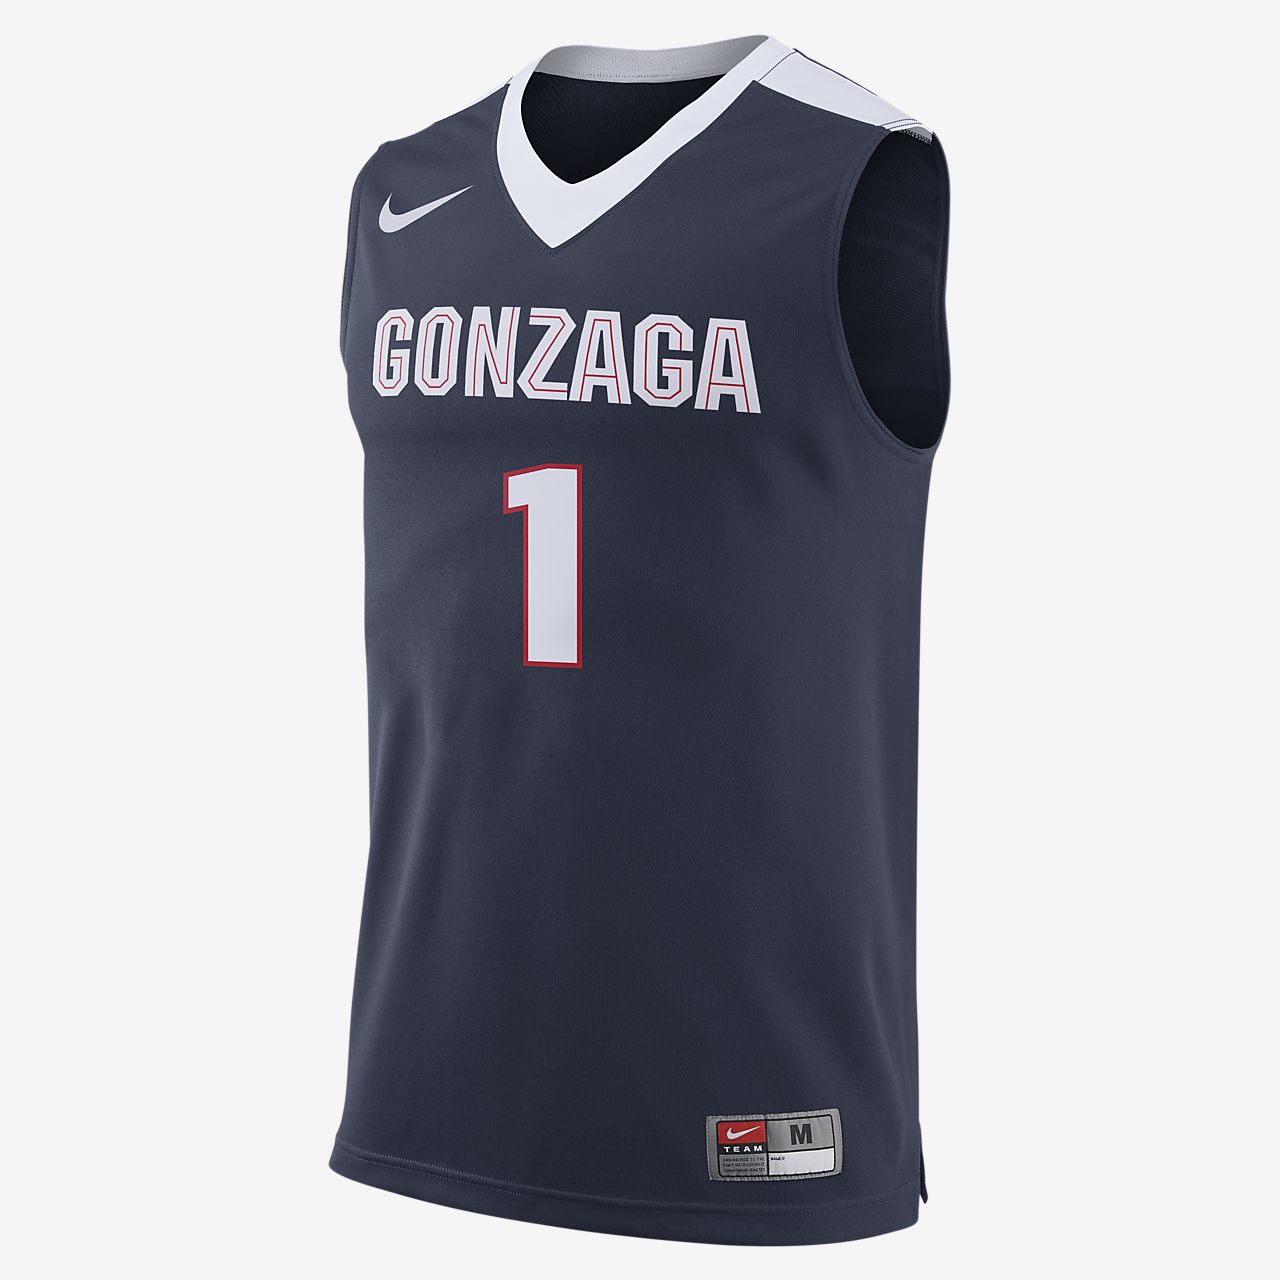 Men's Basketball Jersey. Nike.com